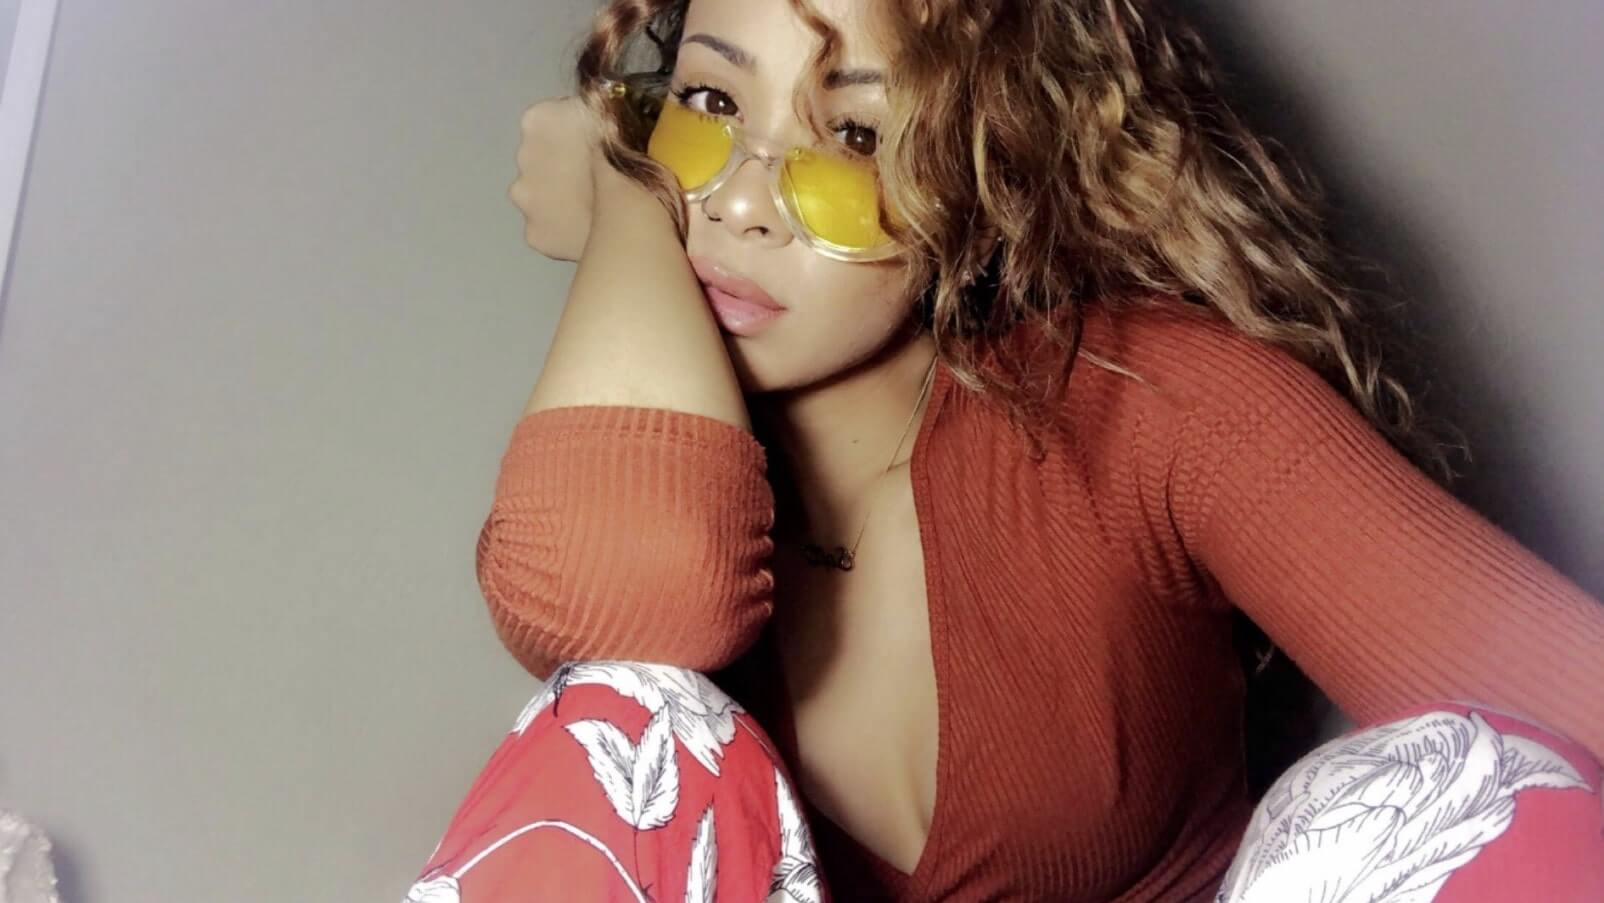 Women’s Yellow Retro Half-Frame Sunglasses